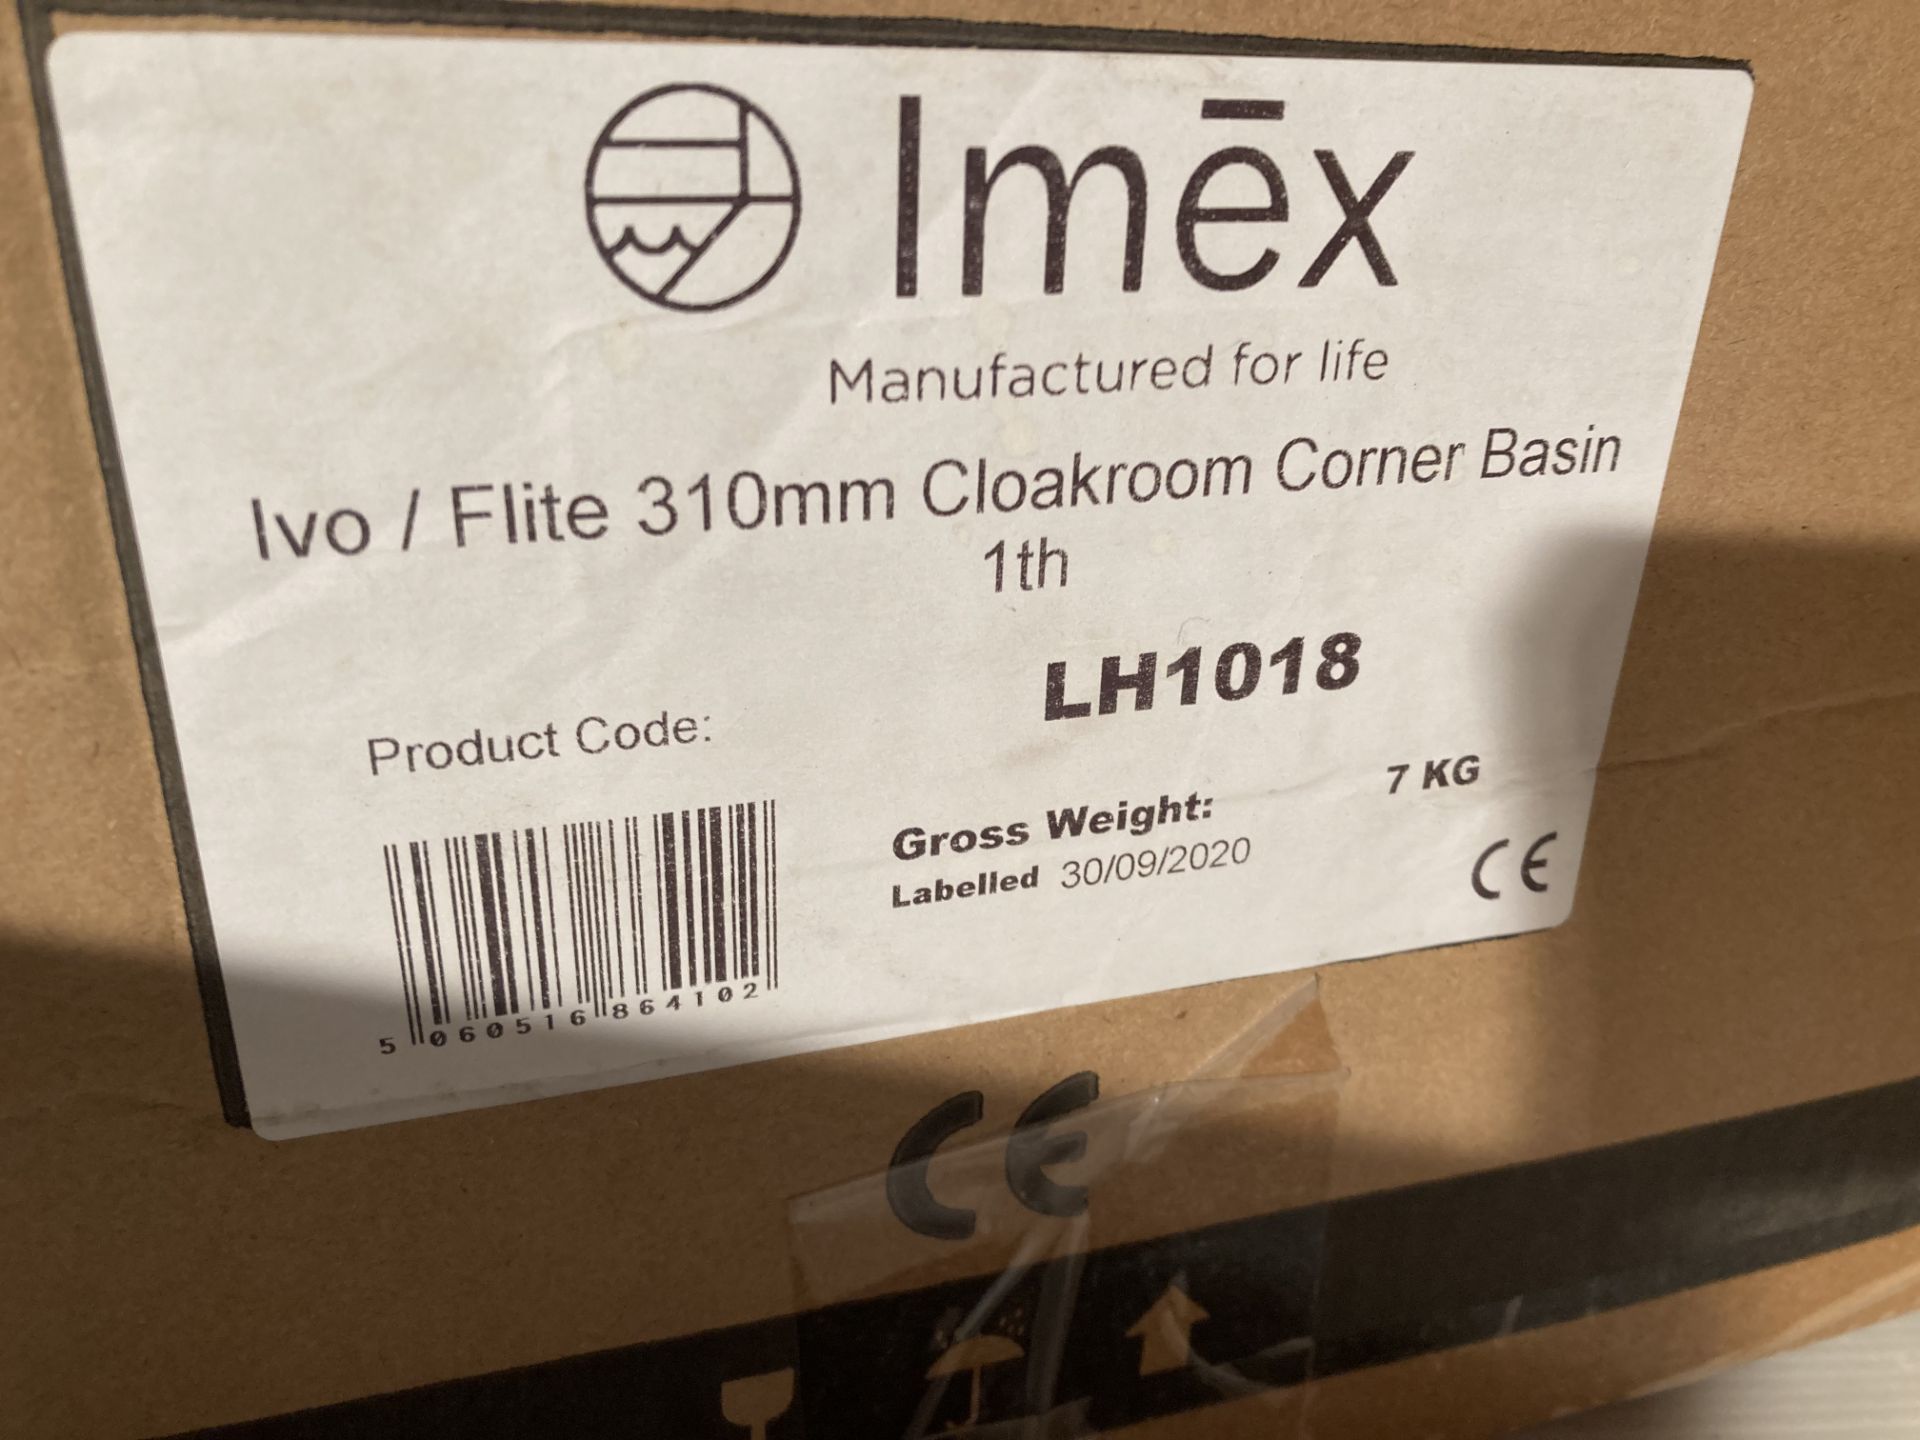 Imex 310mm cloakroom corner basin in white (saleroom location: QL07) - Image 2 of 2